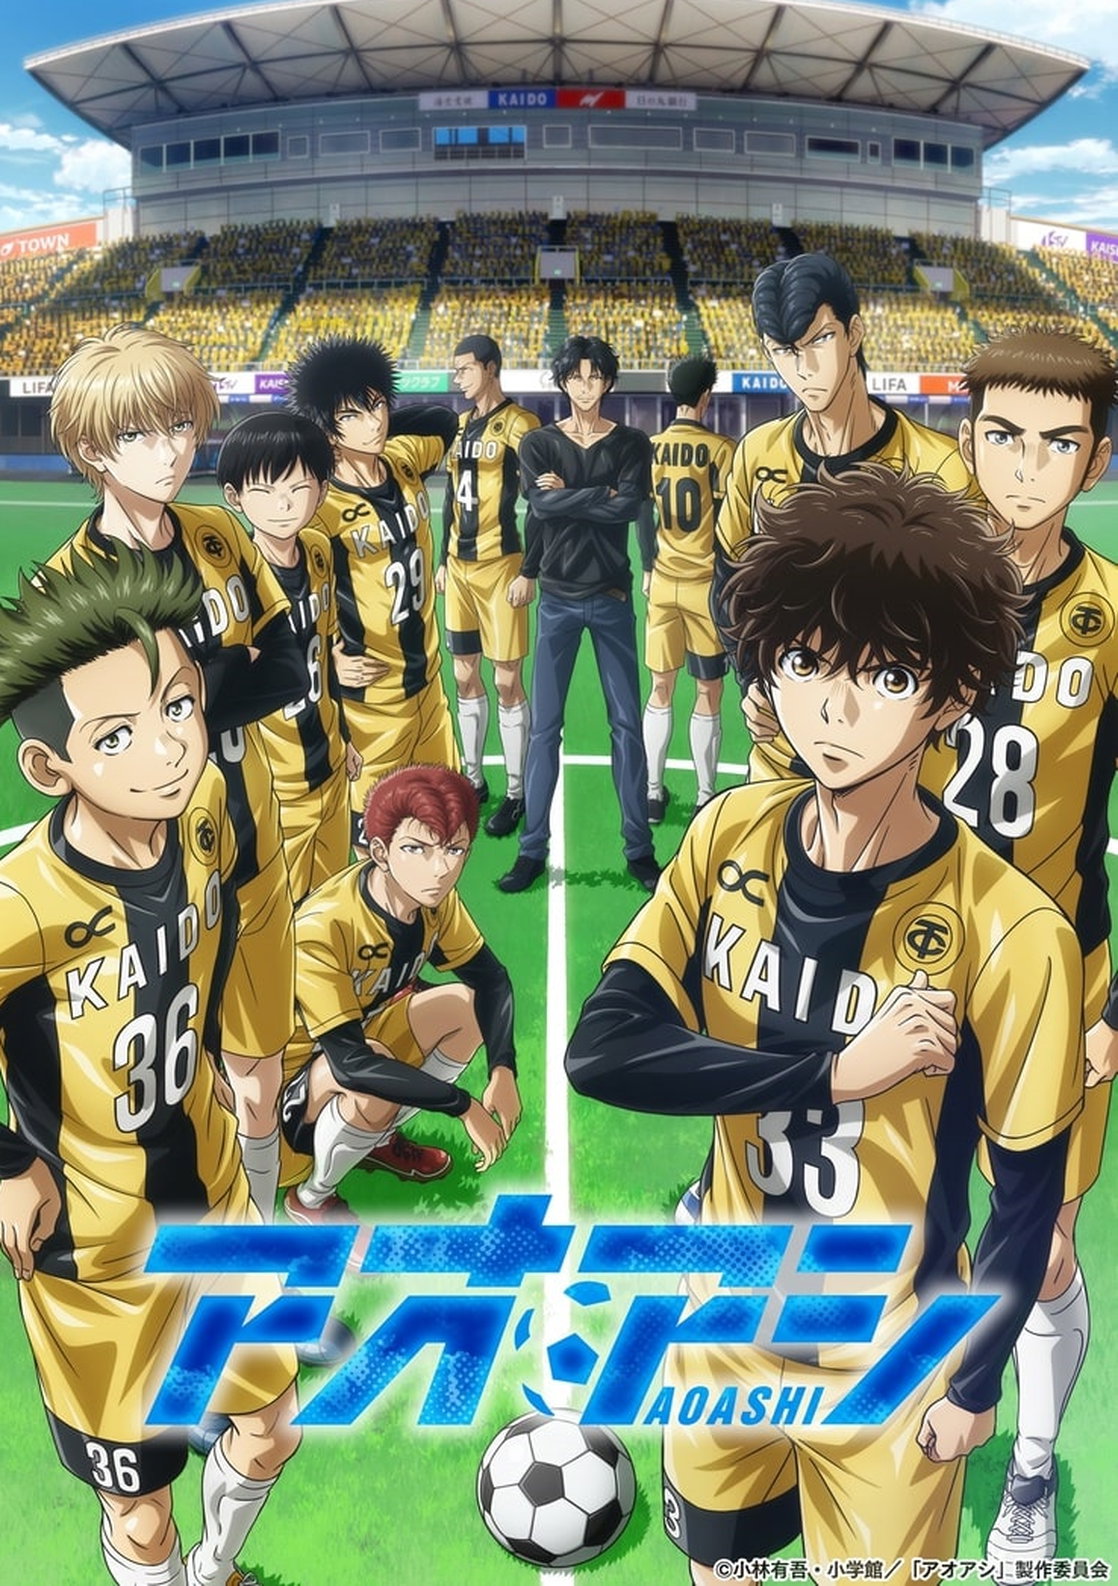 Best Sports Anime